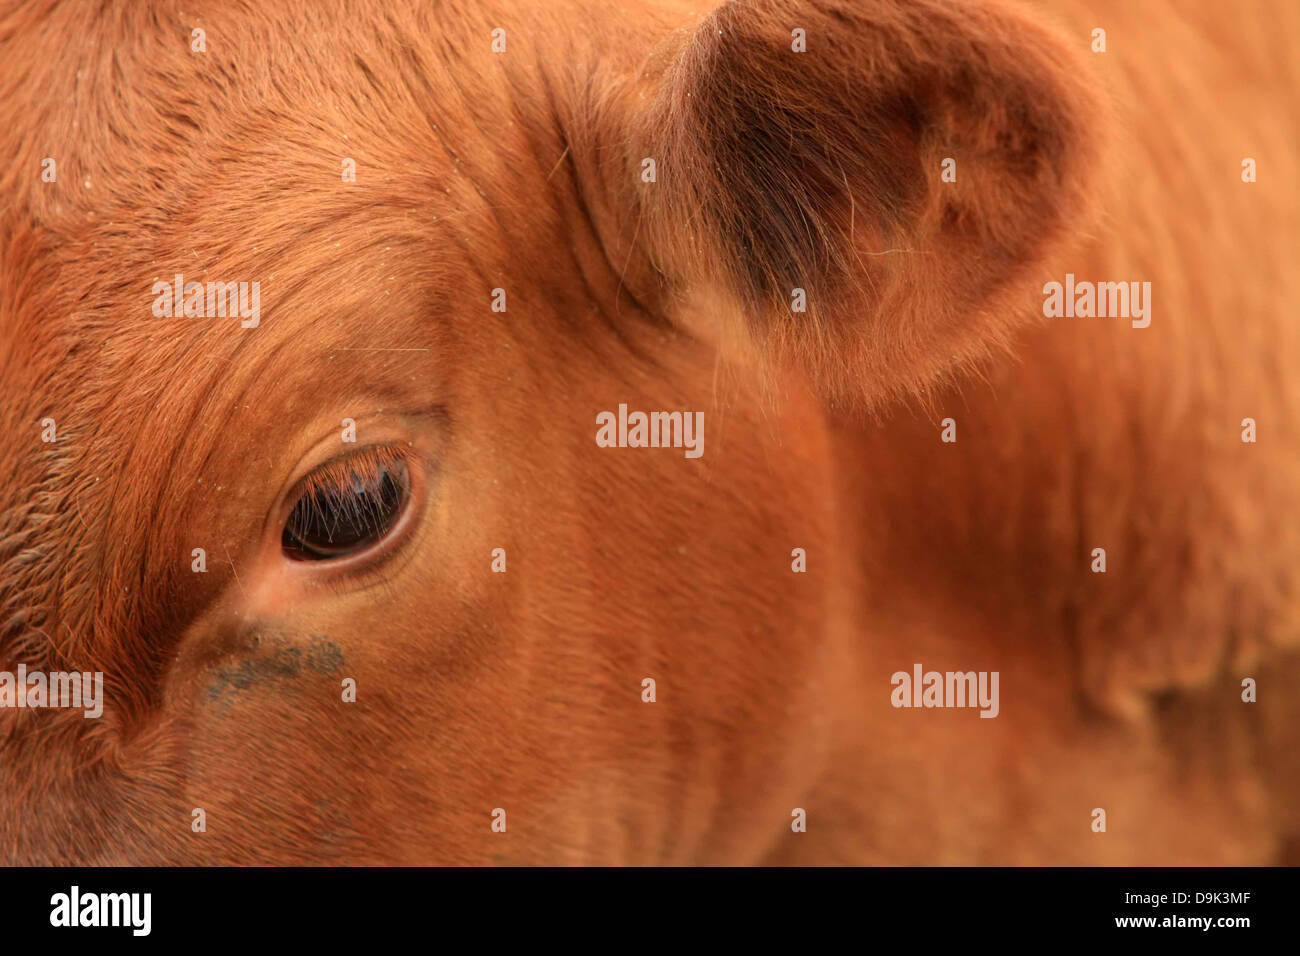 Angus angus ternero vaca animal toro finca ganadera país closeup rural ojo oreja Foto de stock